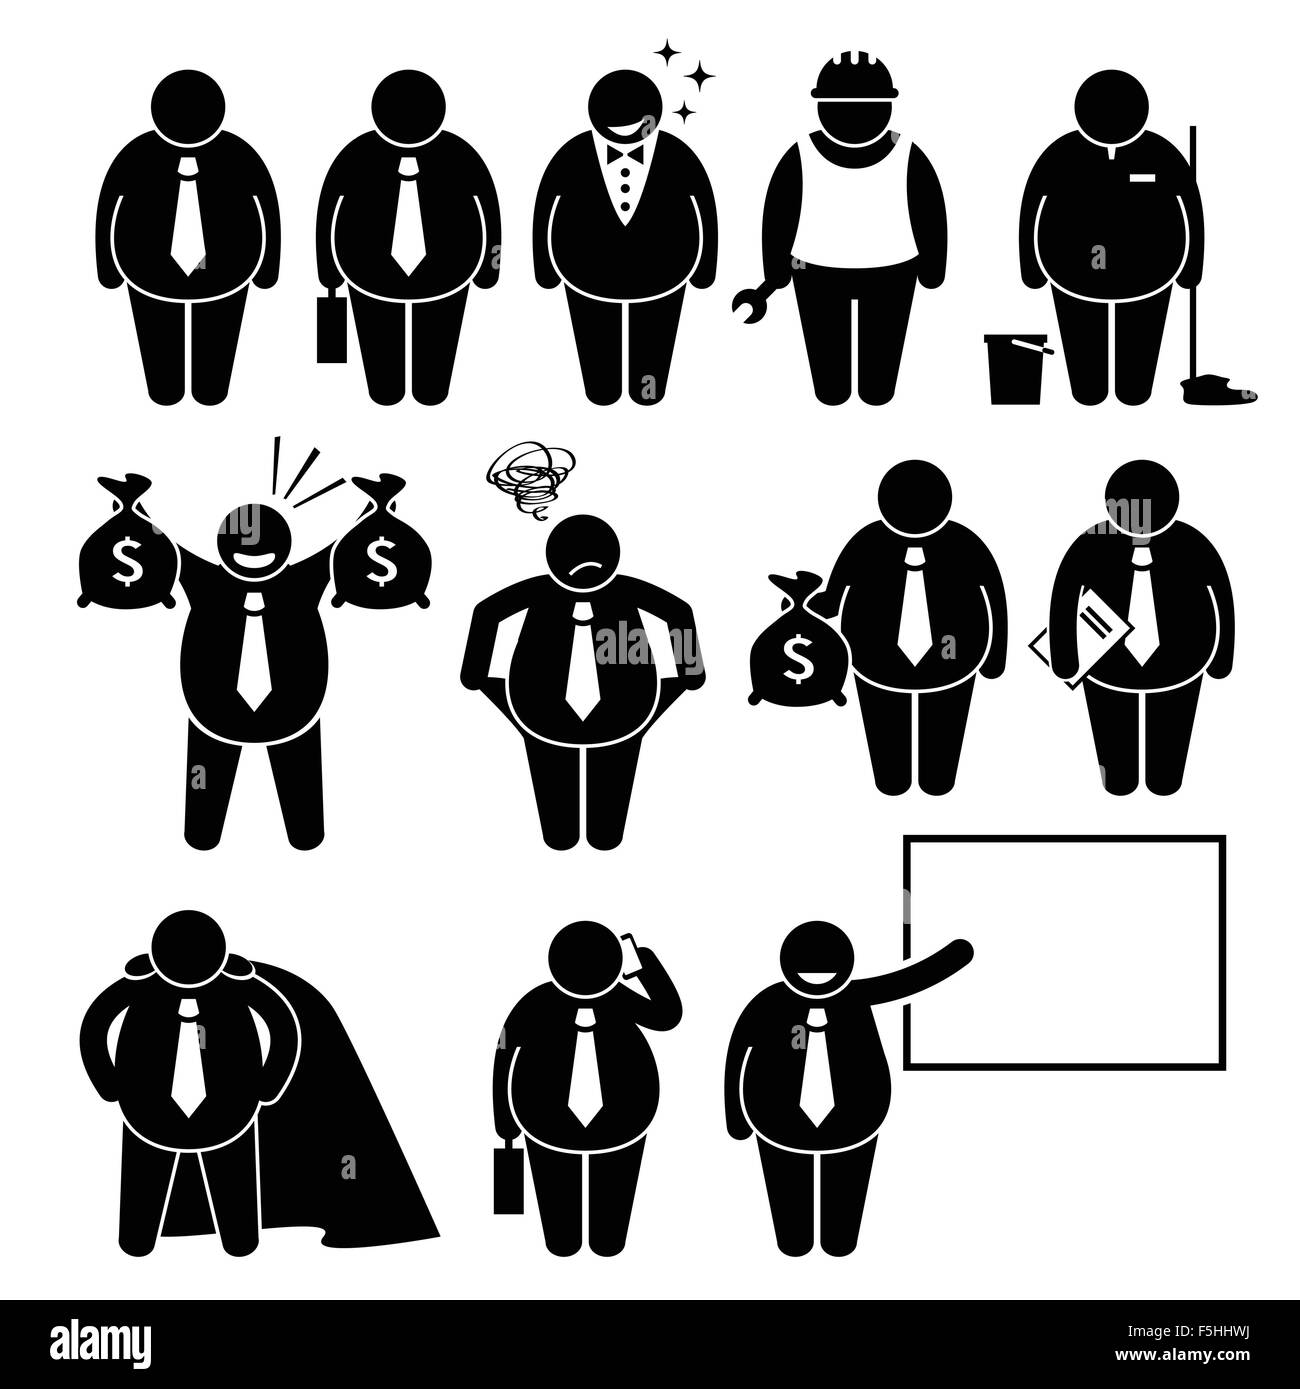 Fat Businessman Business Man Worker Stick Figure Pictogram Icons Stock Vector